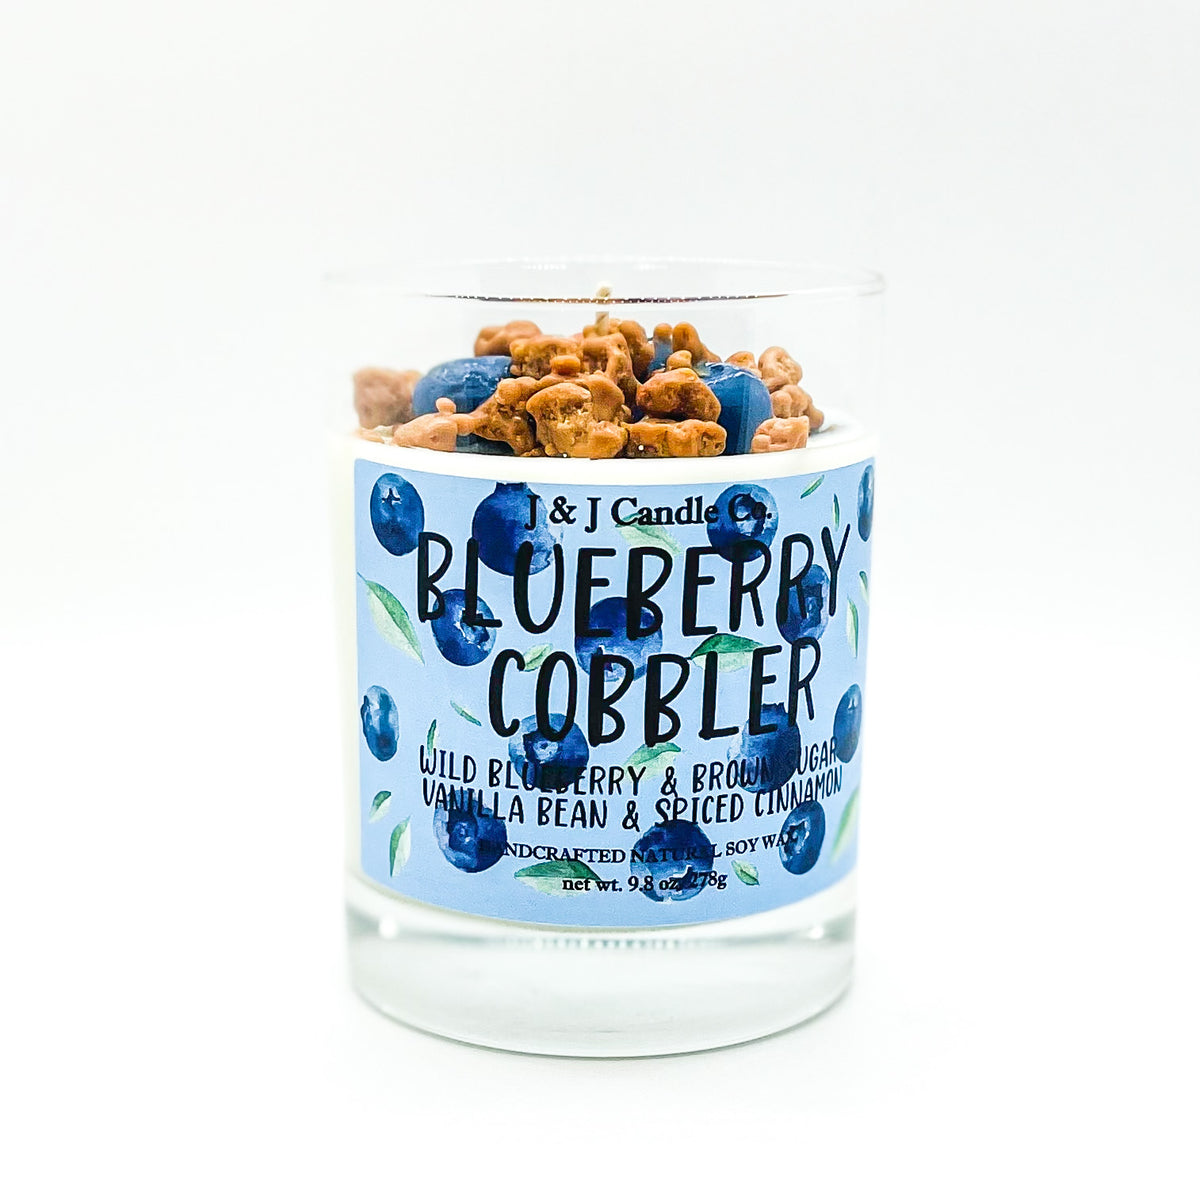 20oz Jar Candle Blueberry Cobbler